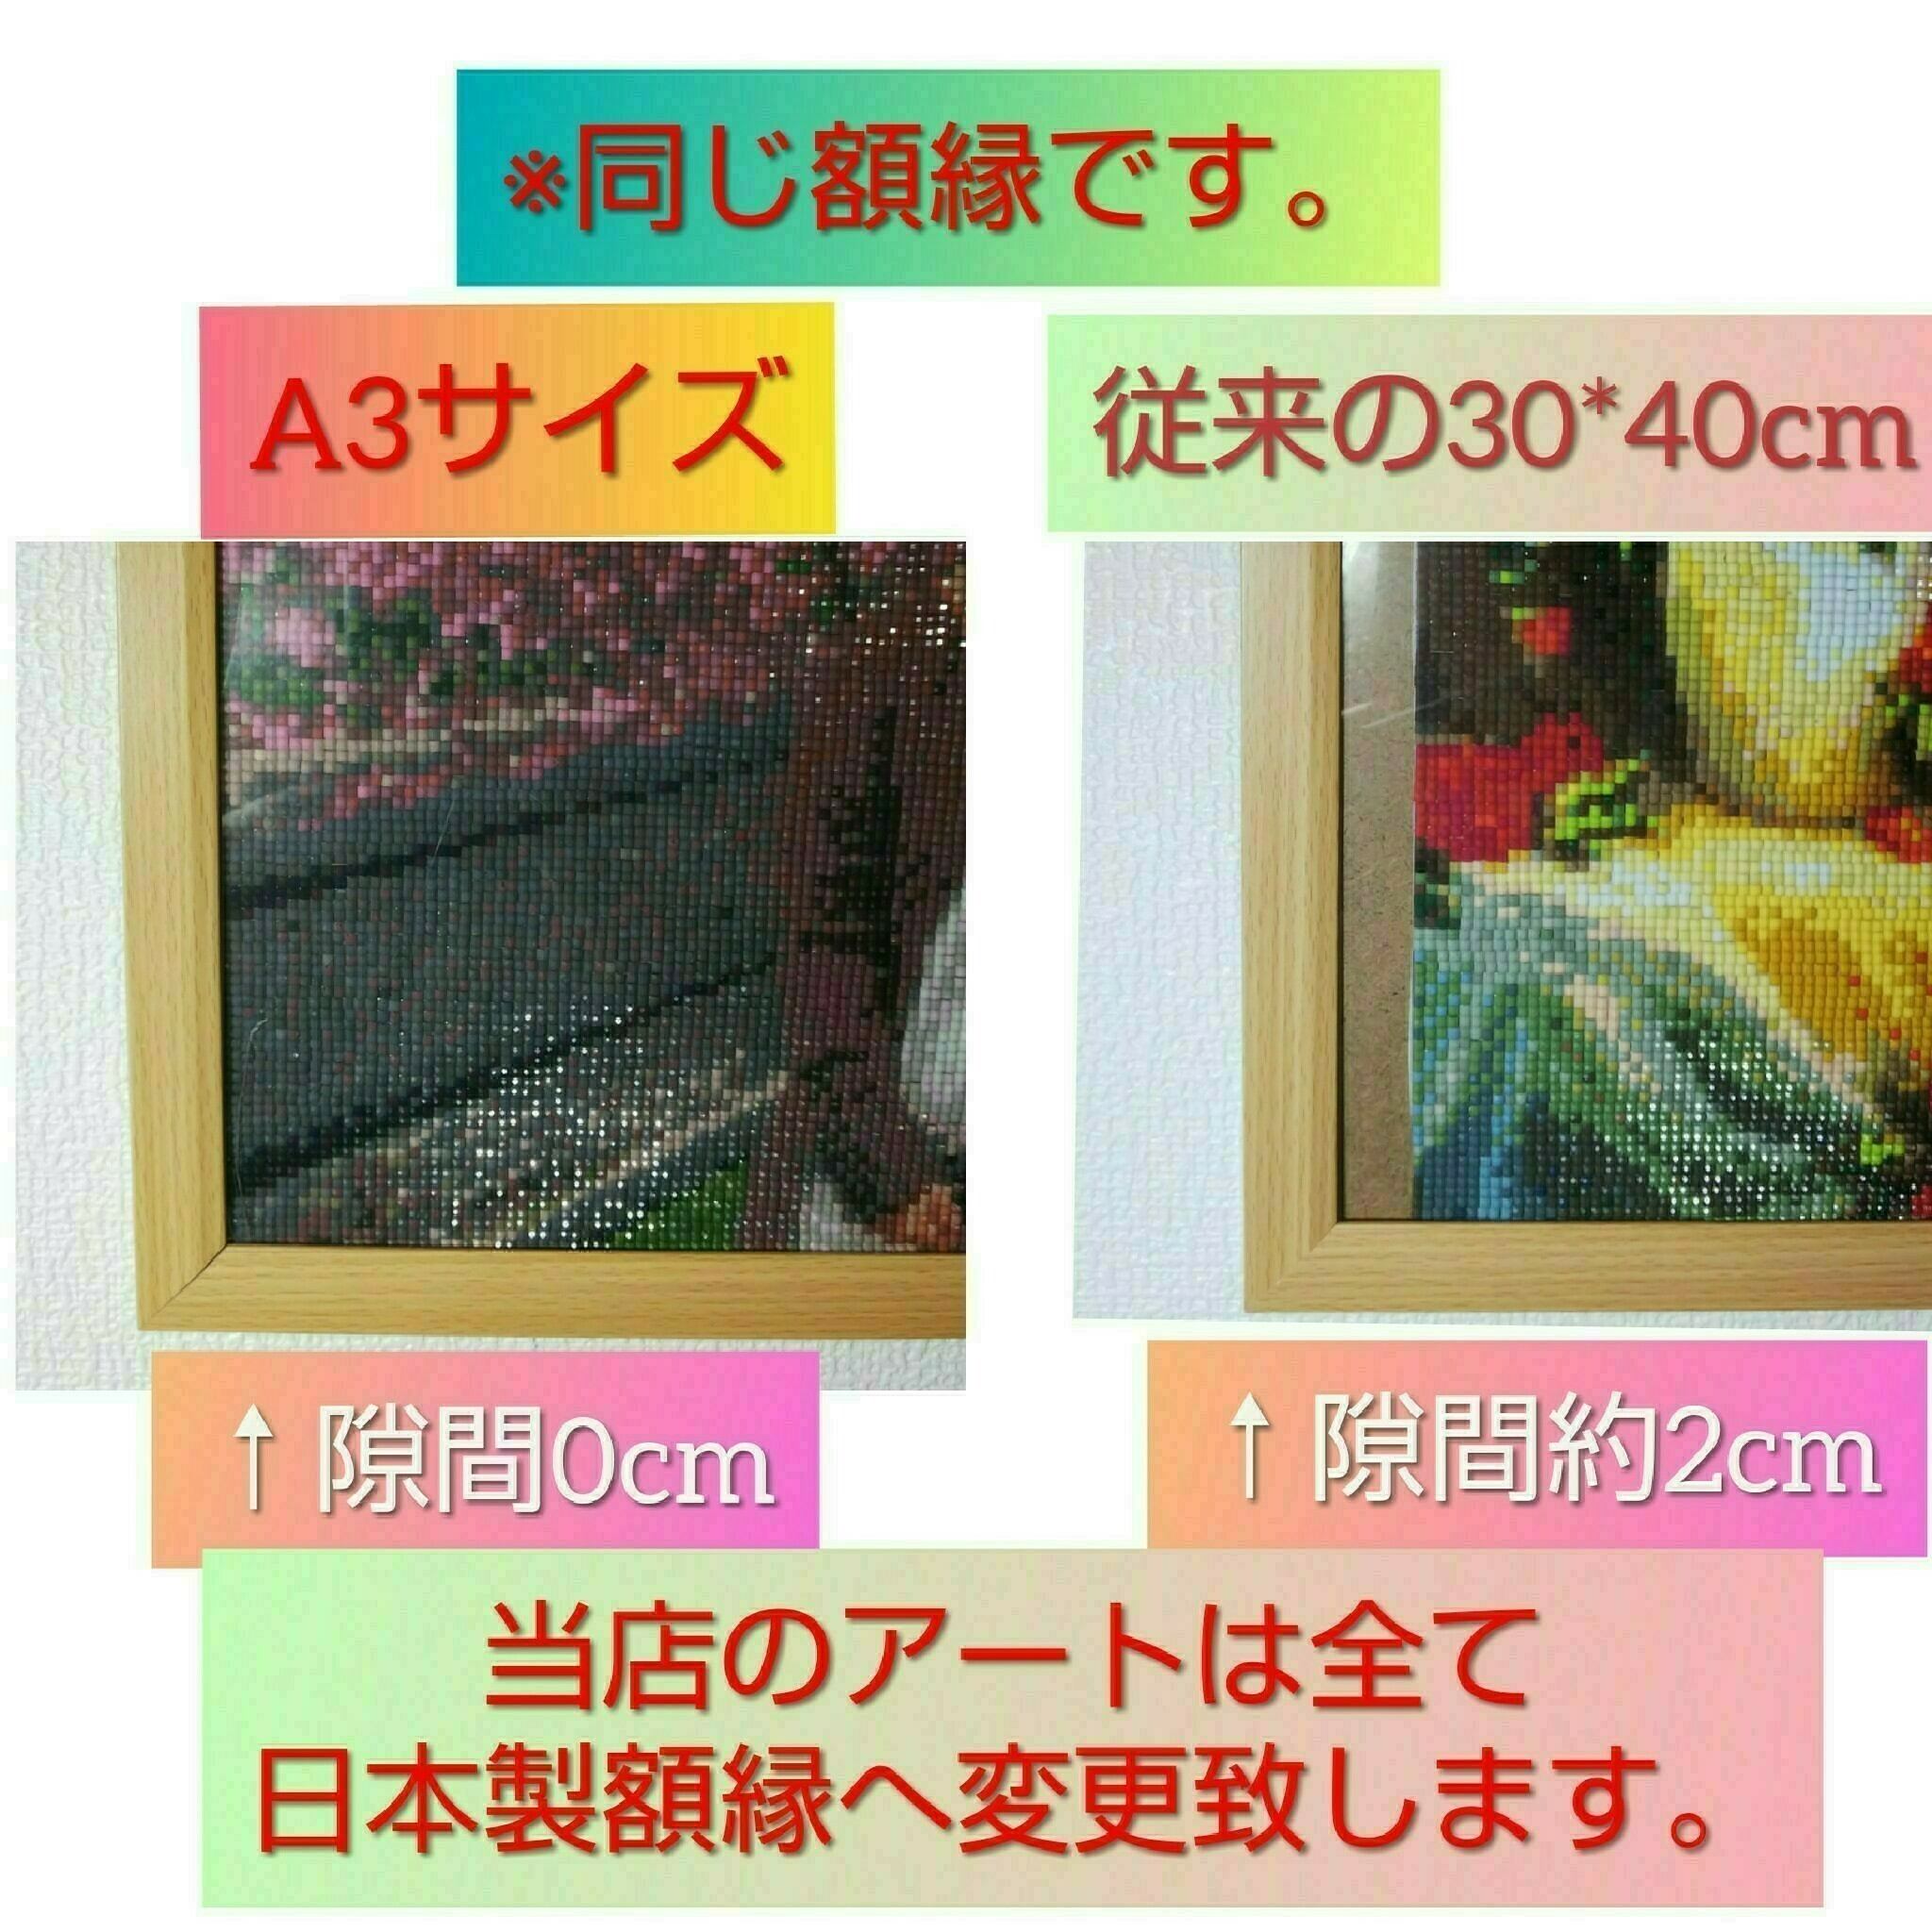 A3サイズ 四角ビーズ【runa-523】ダイヤモンドアート